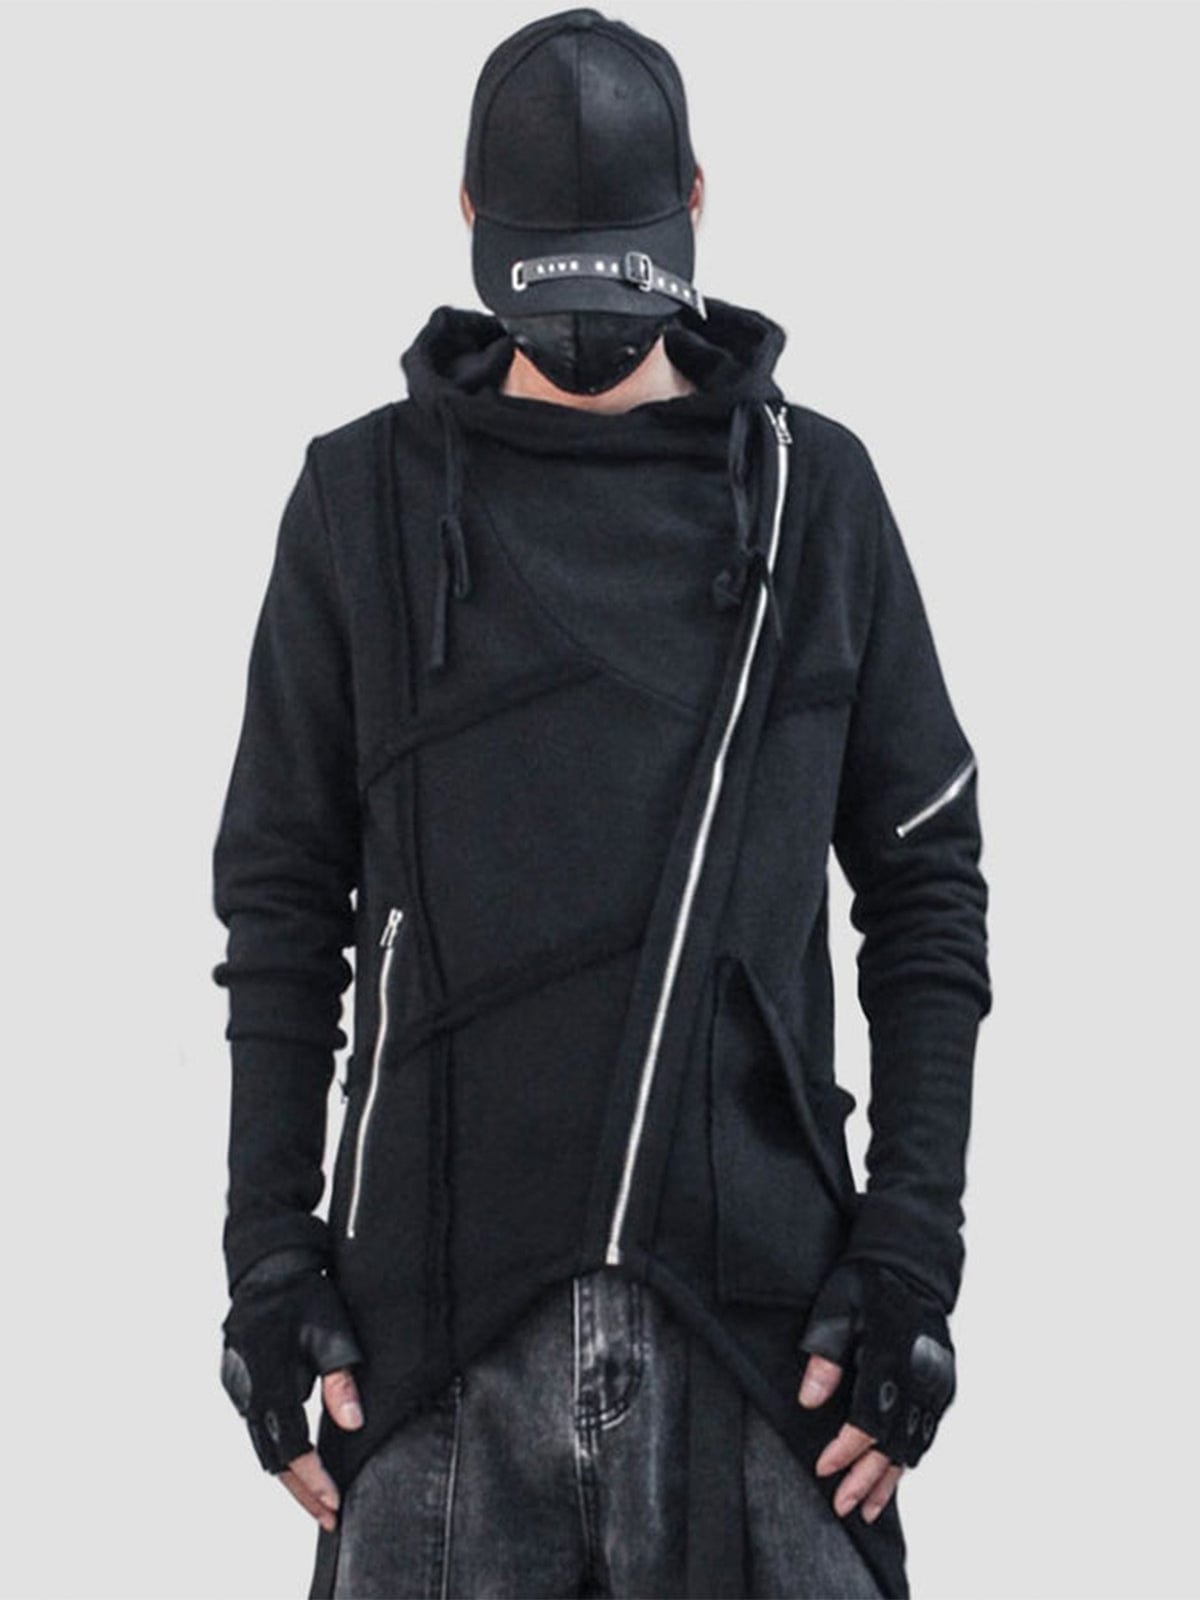 Dark Function Irregular Diagonal Zipper Hooded Jacket Streetwear Brand Techwear Combat Tactical YUGEN THEORY